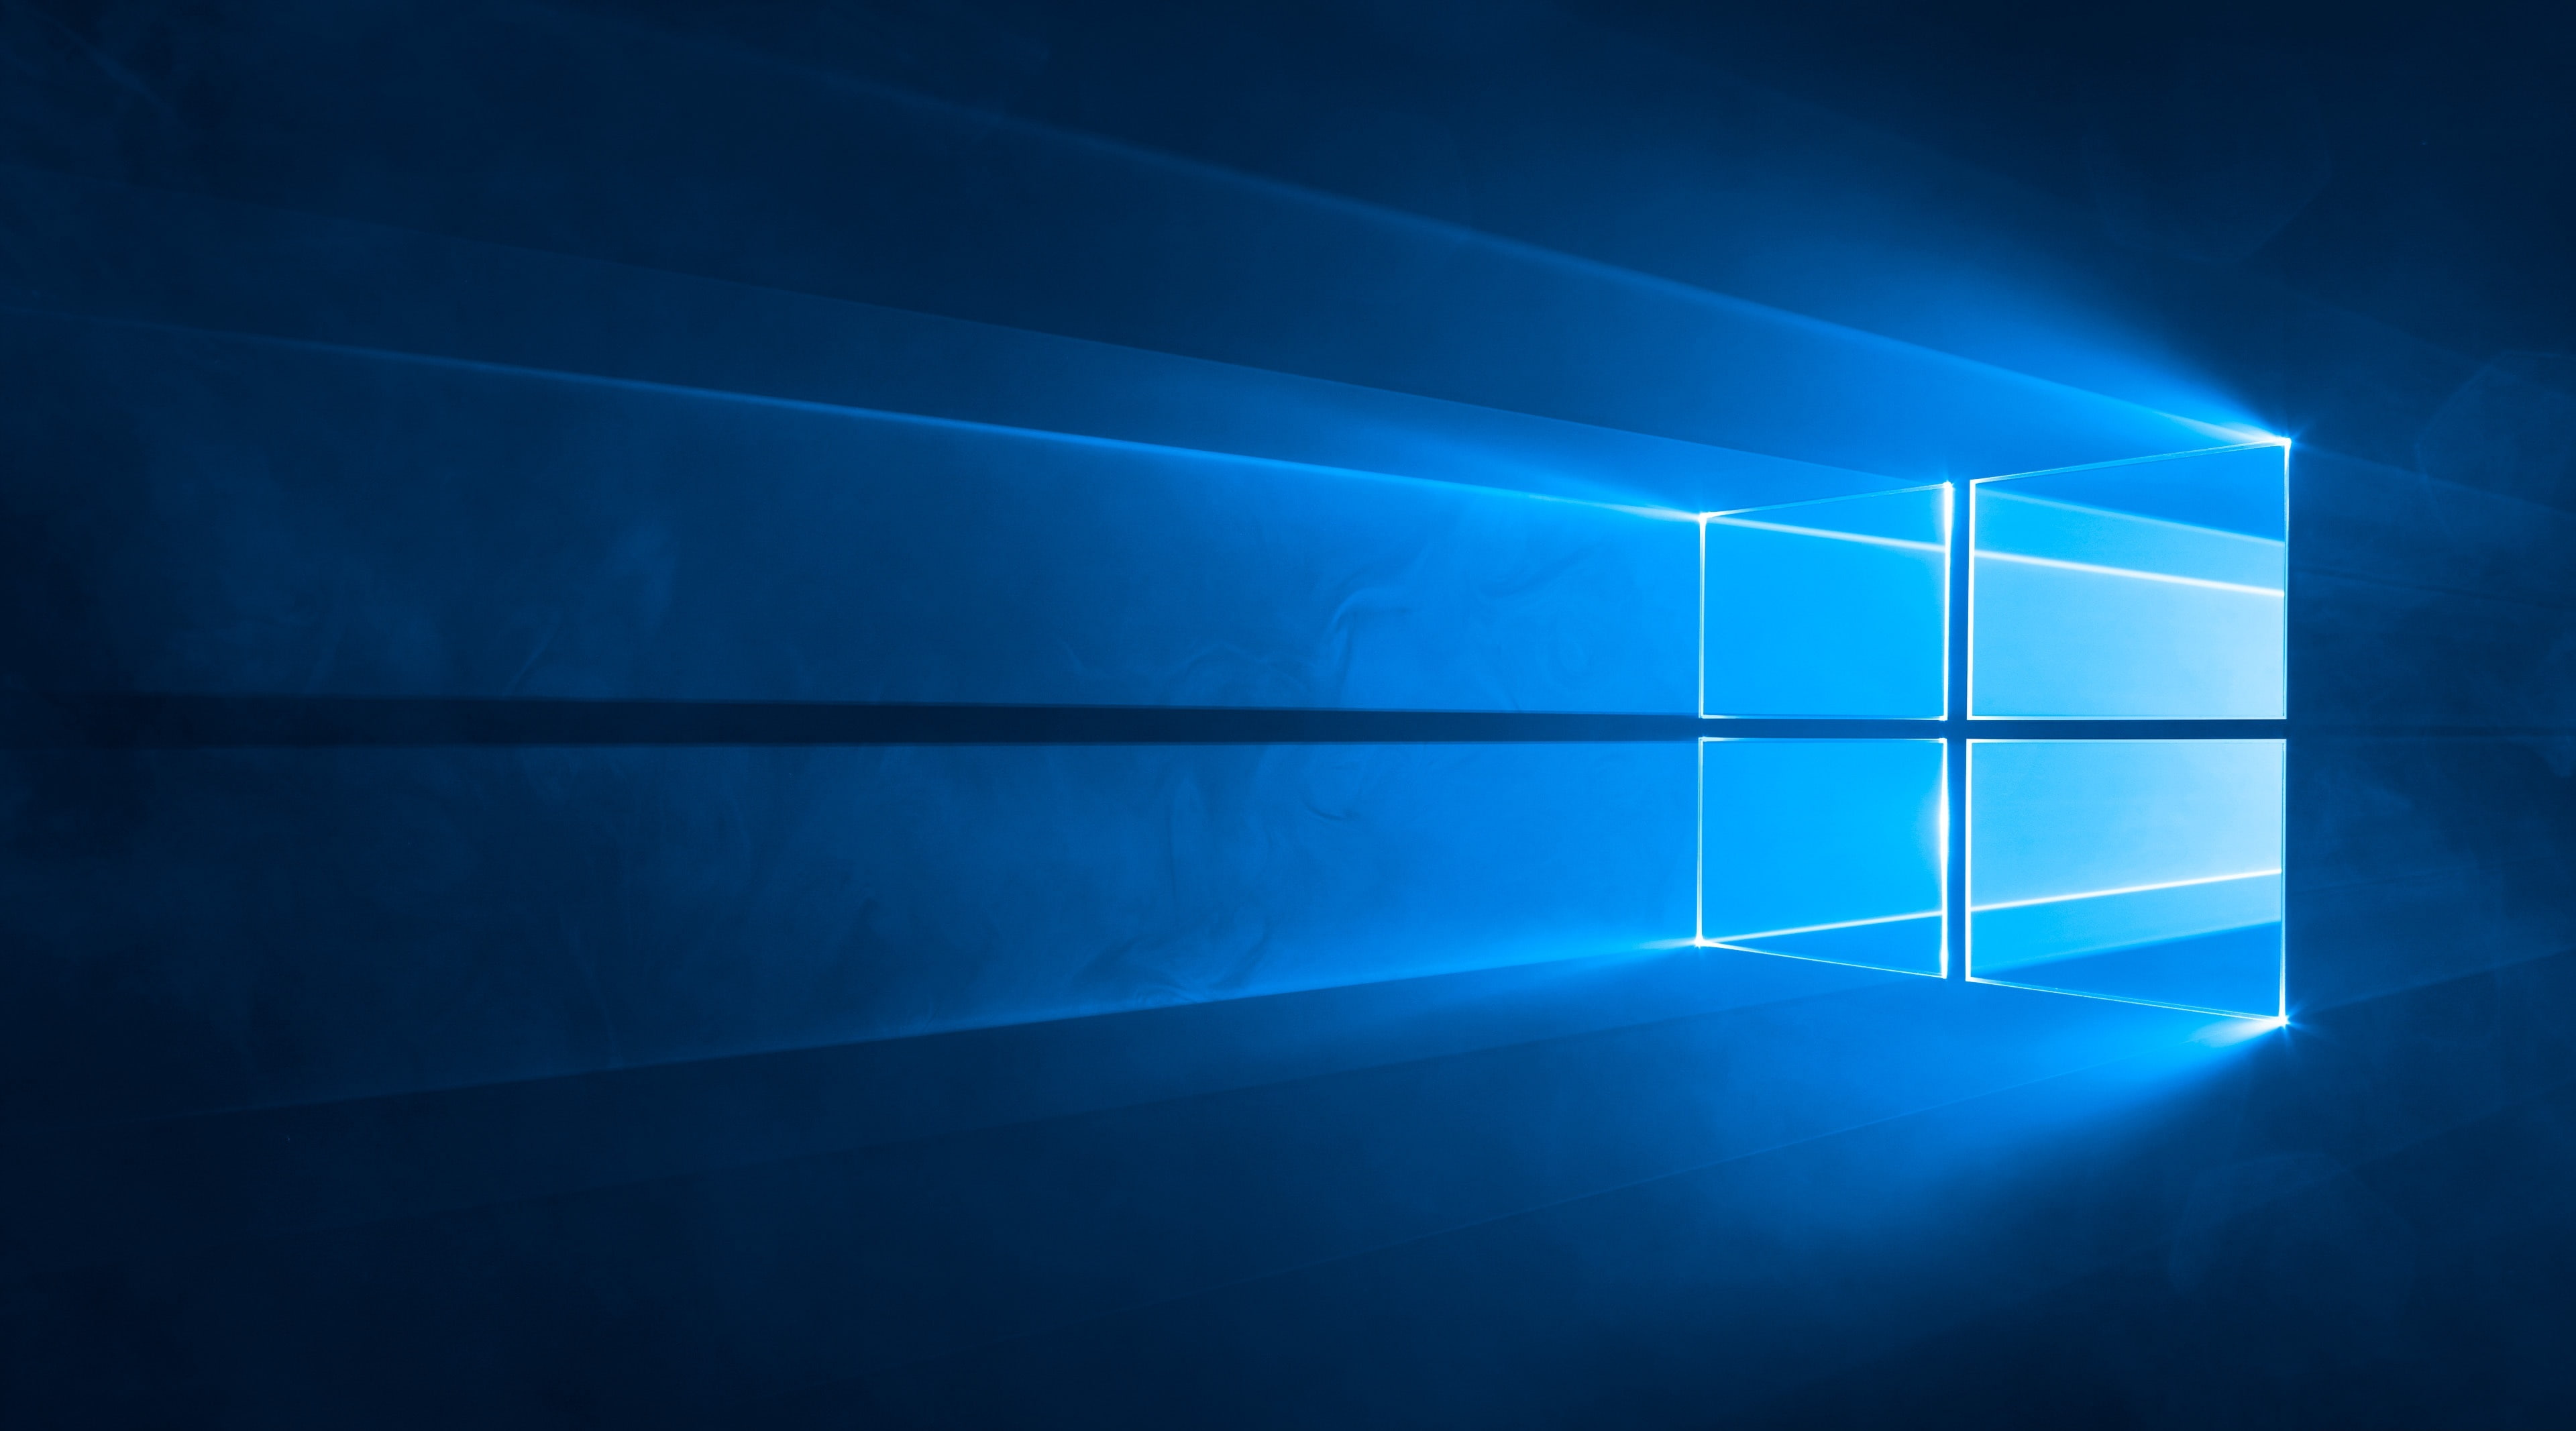 Windows 10 Hero 4K, Windows logo, blue, backgrounds, light - natural phenomenon